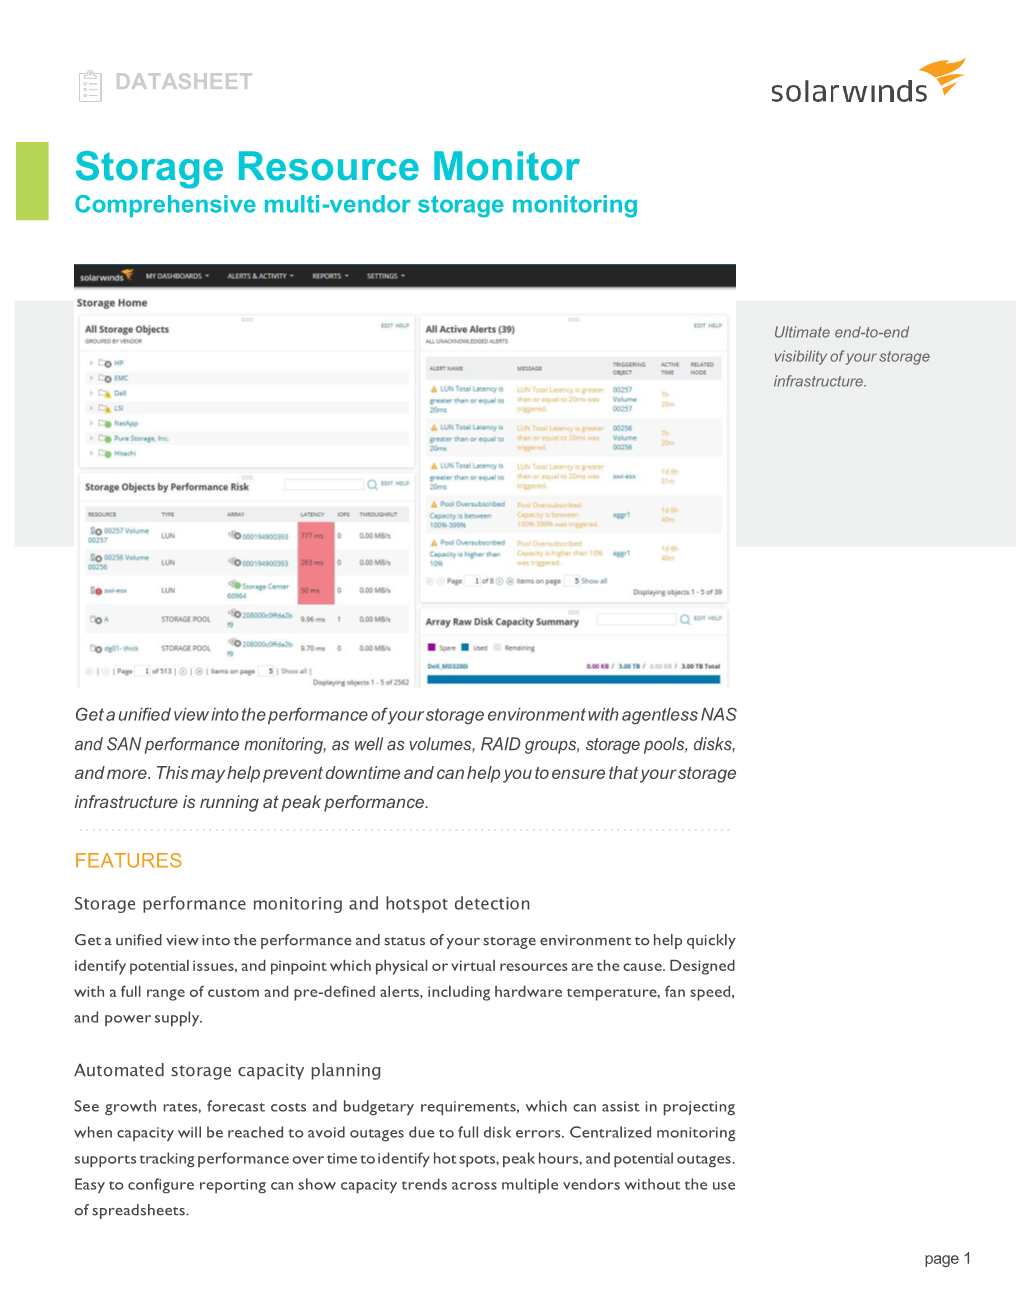 Storage Resource Monitor Comprehensive Multi-Vendor Storage Monitoring